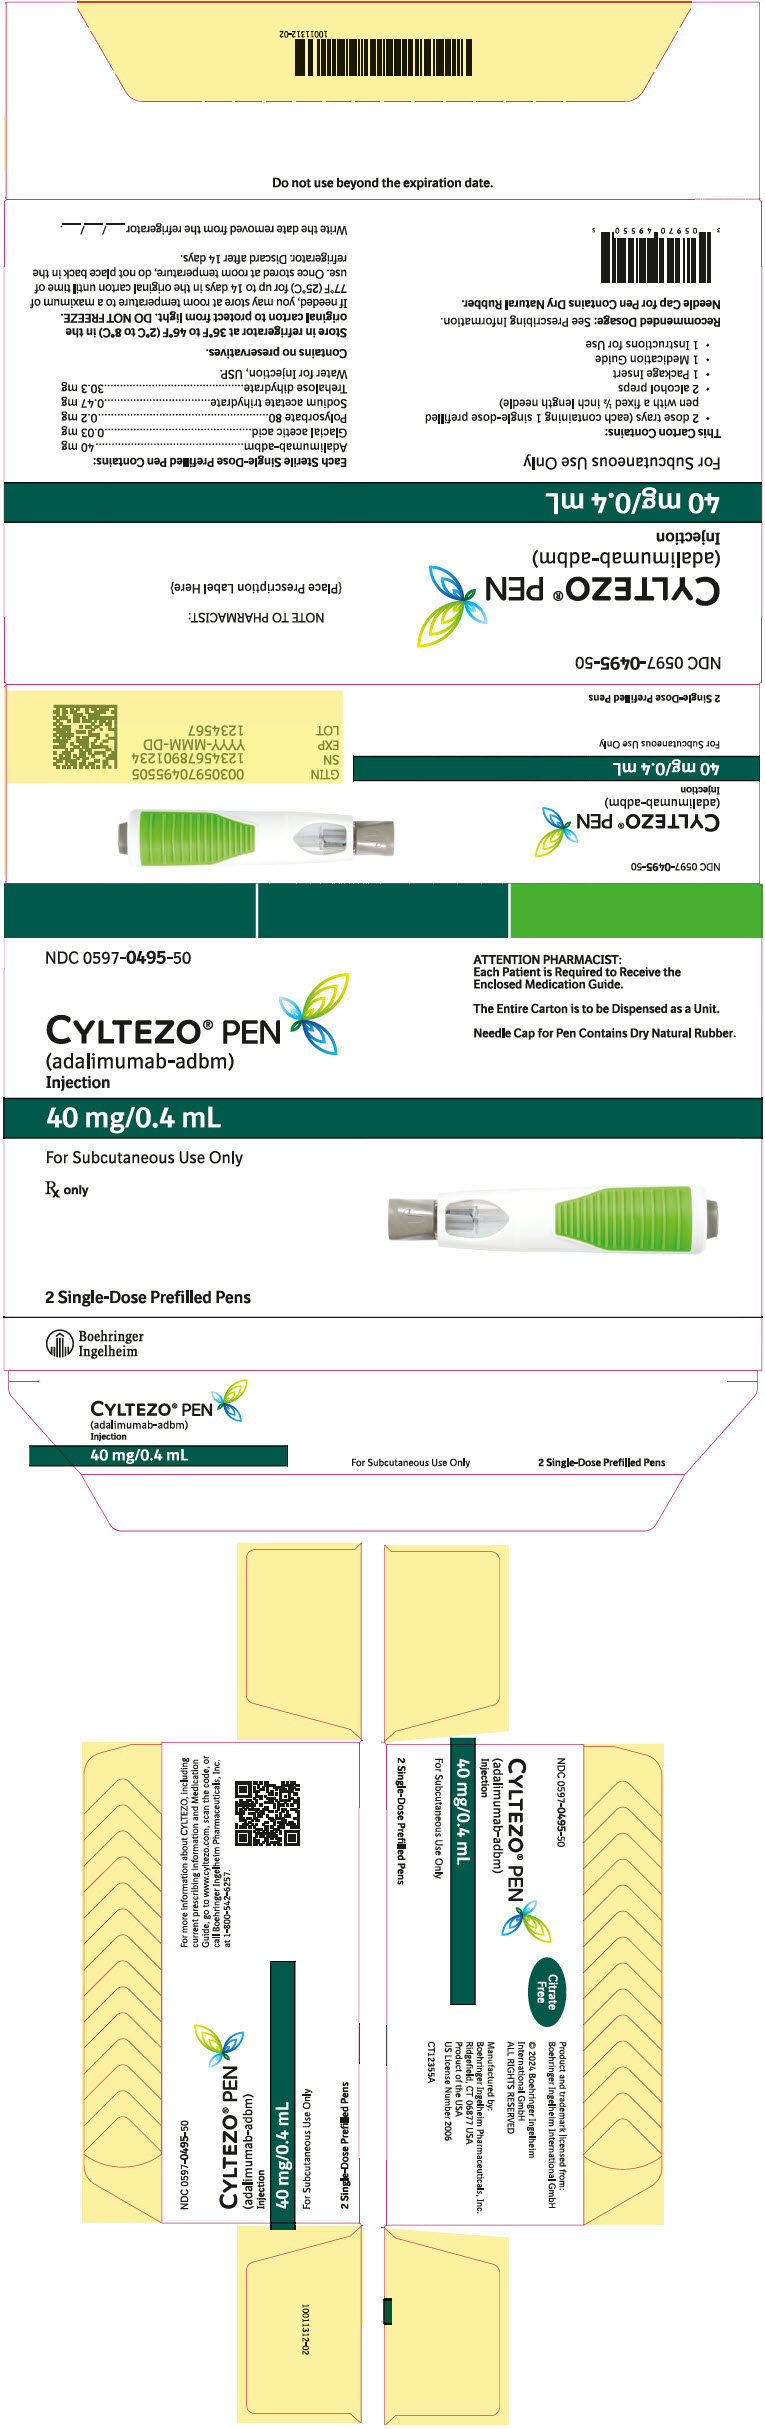 PRINCIPAL DISPLAY PANEL - Kit Carton - 0597-0495-50